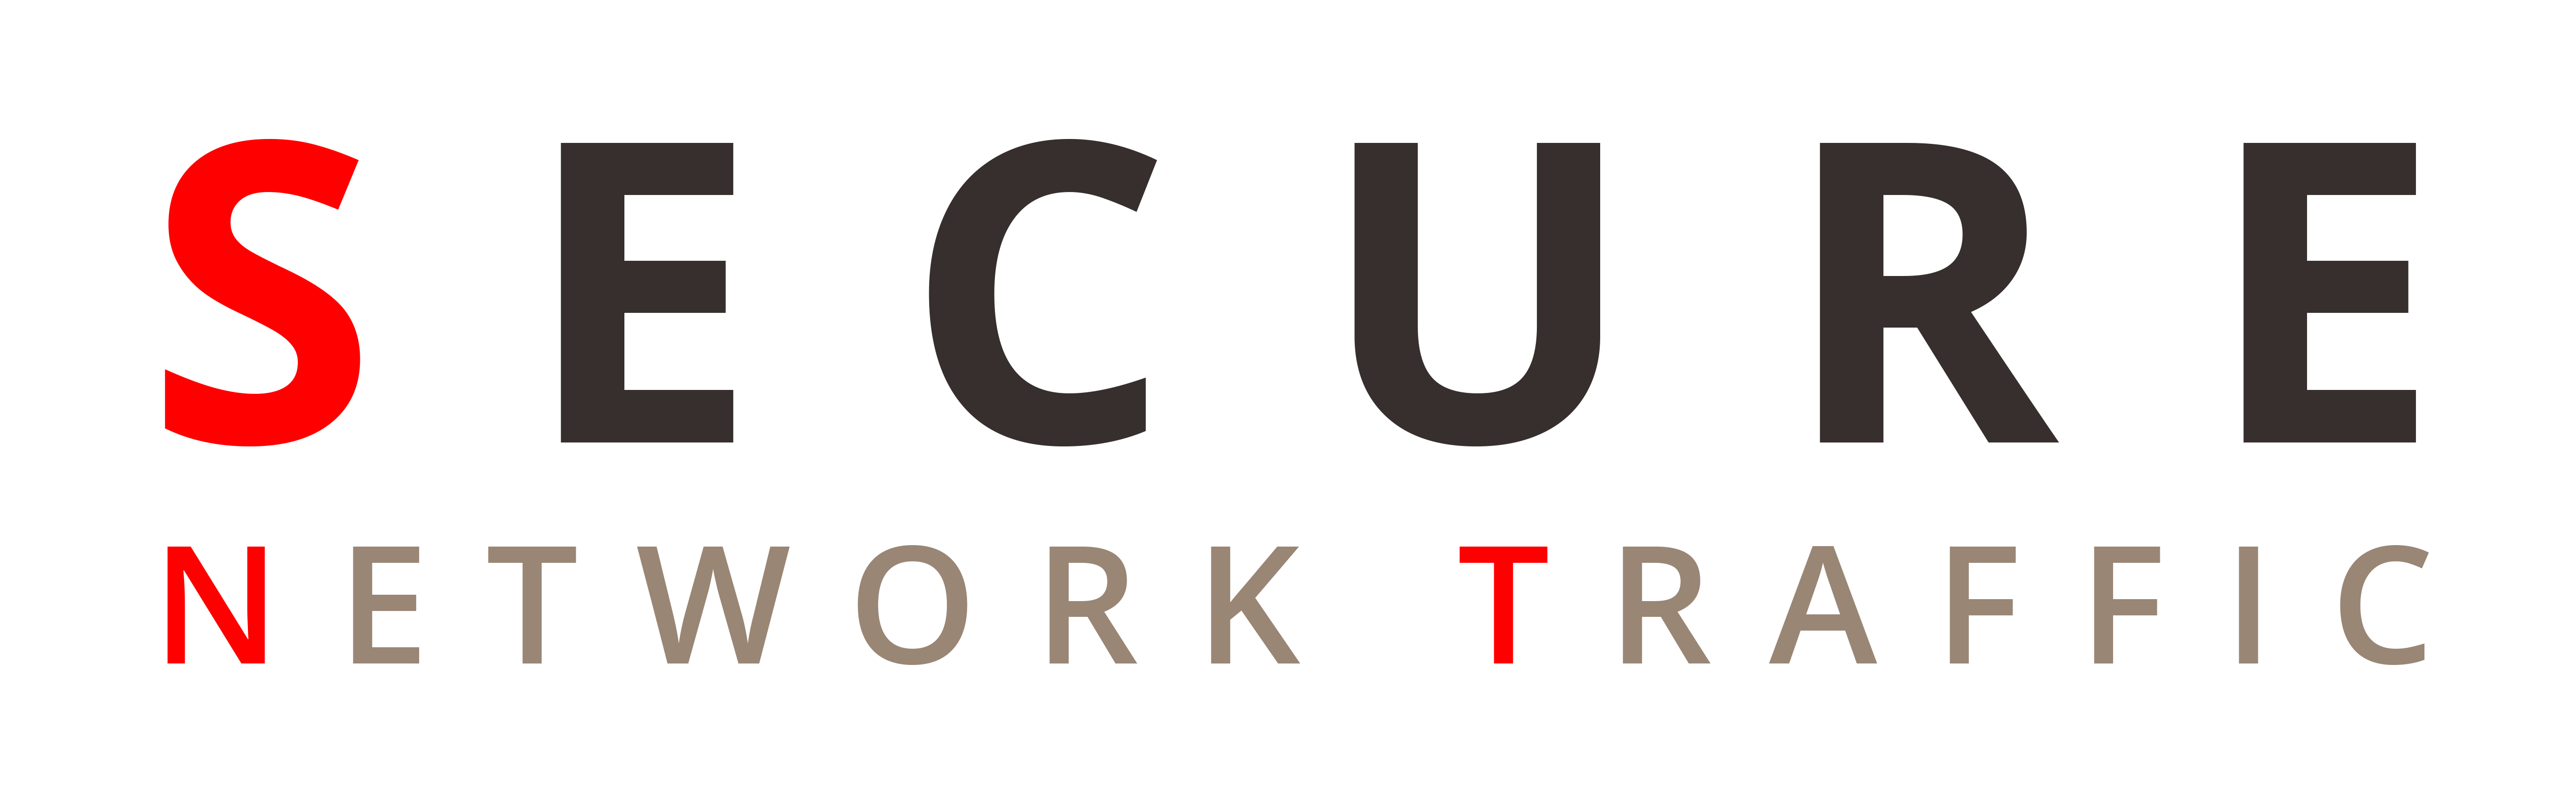 Secure Network Traffic logo